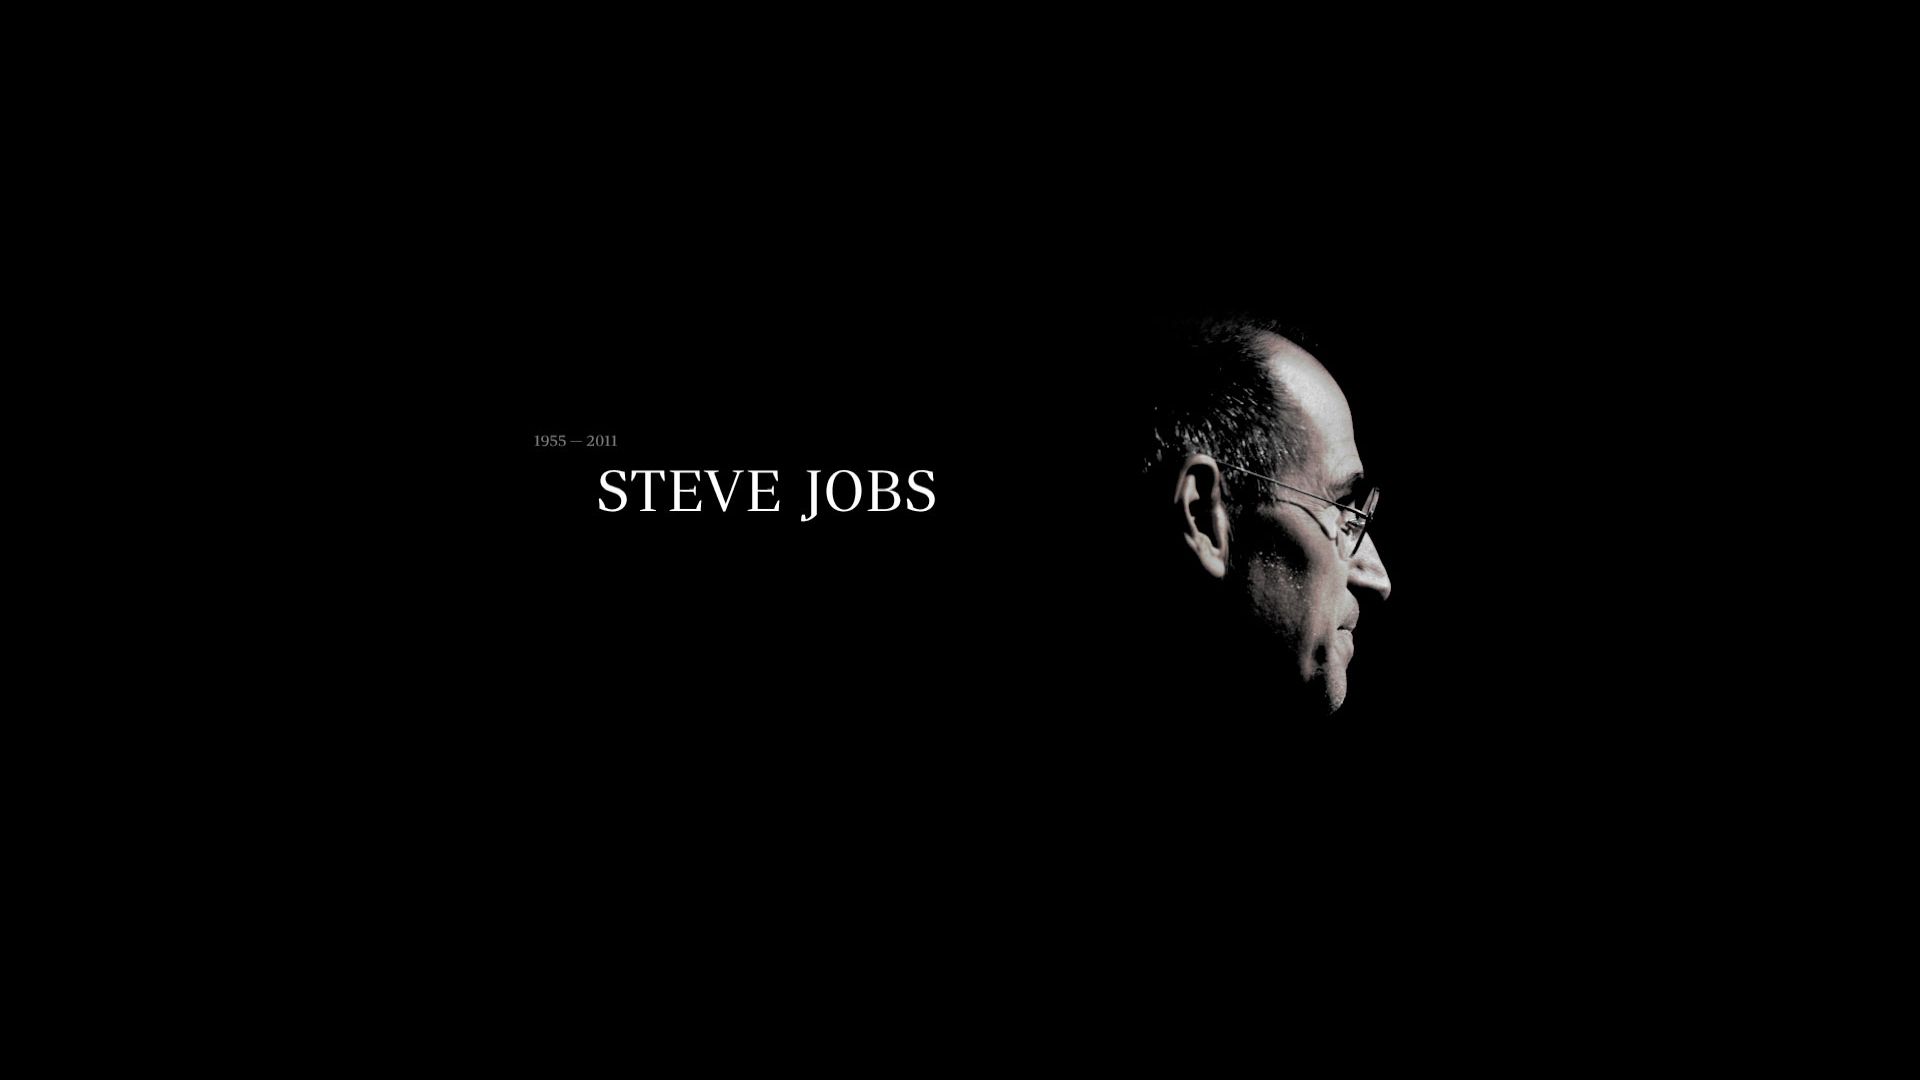 Rip Steve Jobs